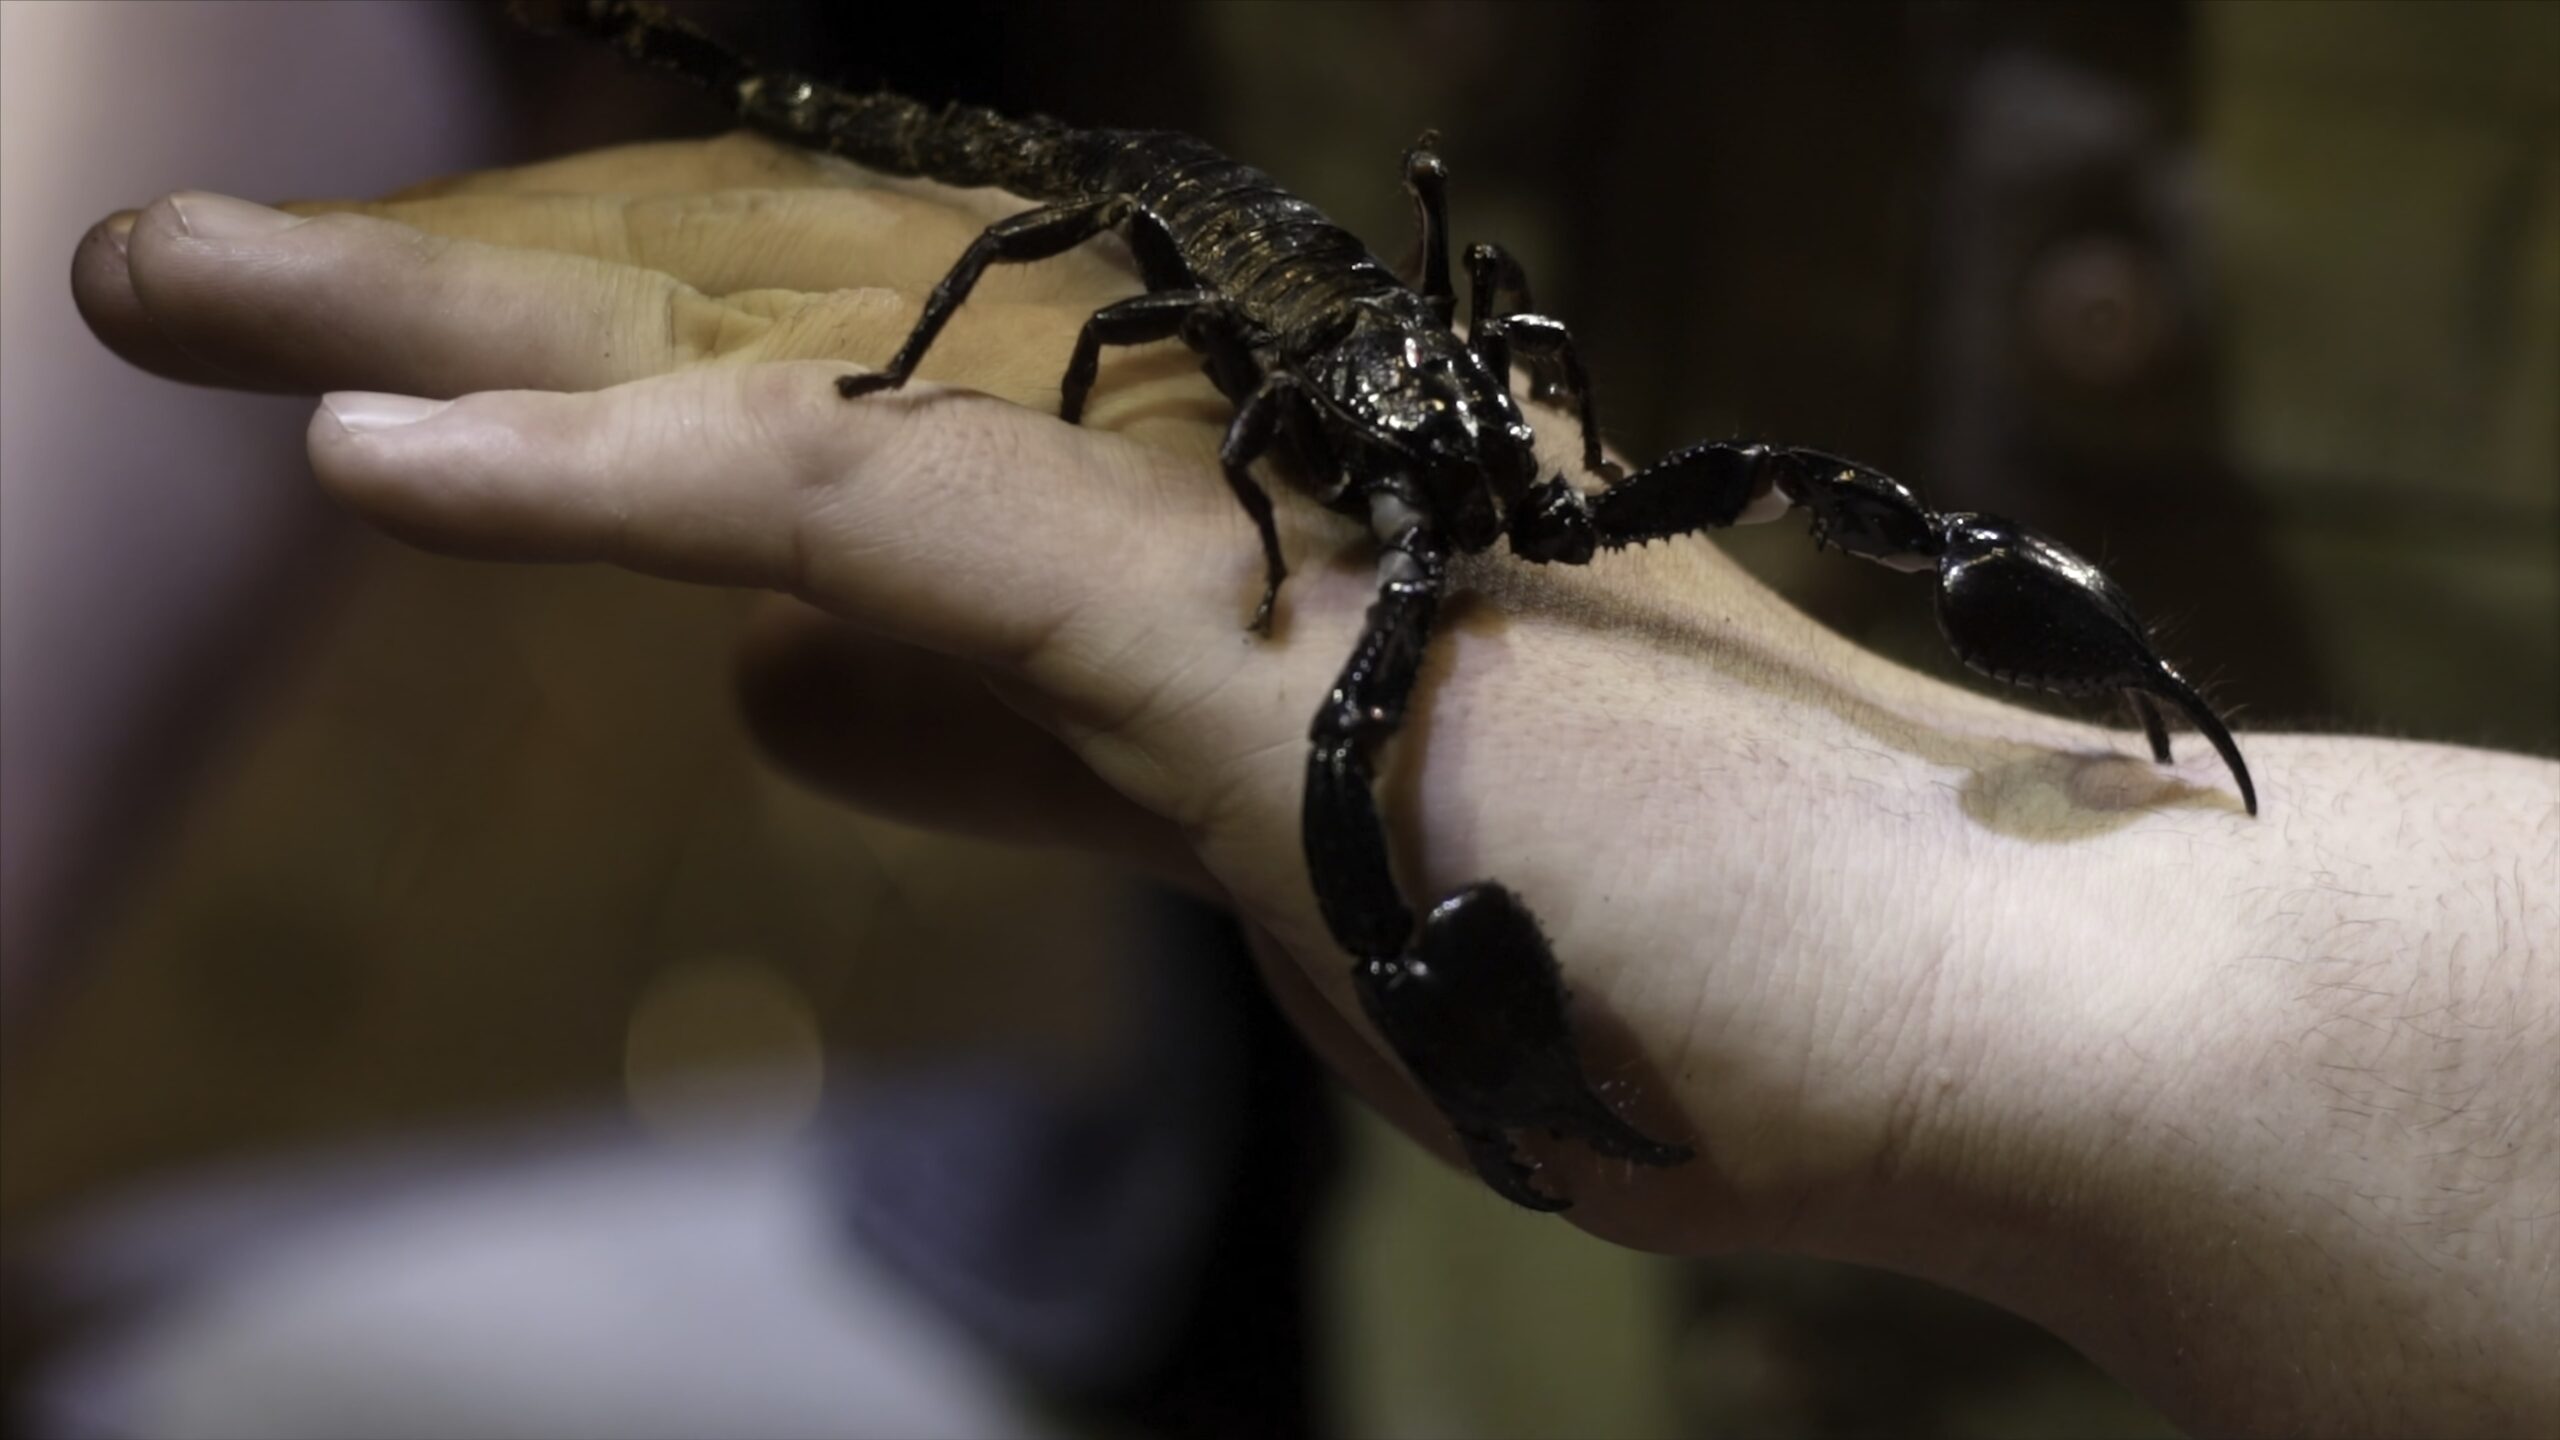 black-scorpion-sitting-on-hand-action-close-up-o-min